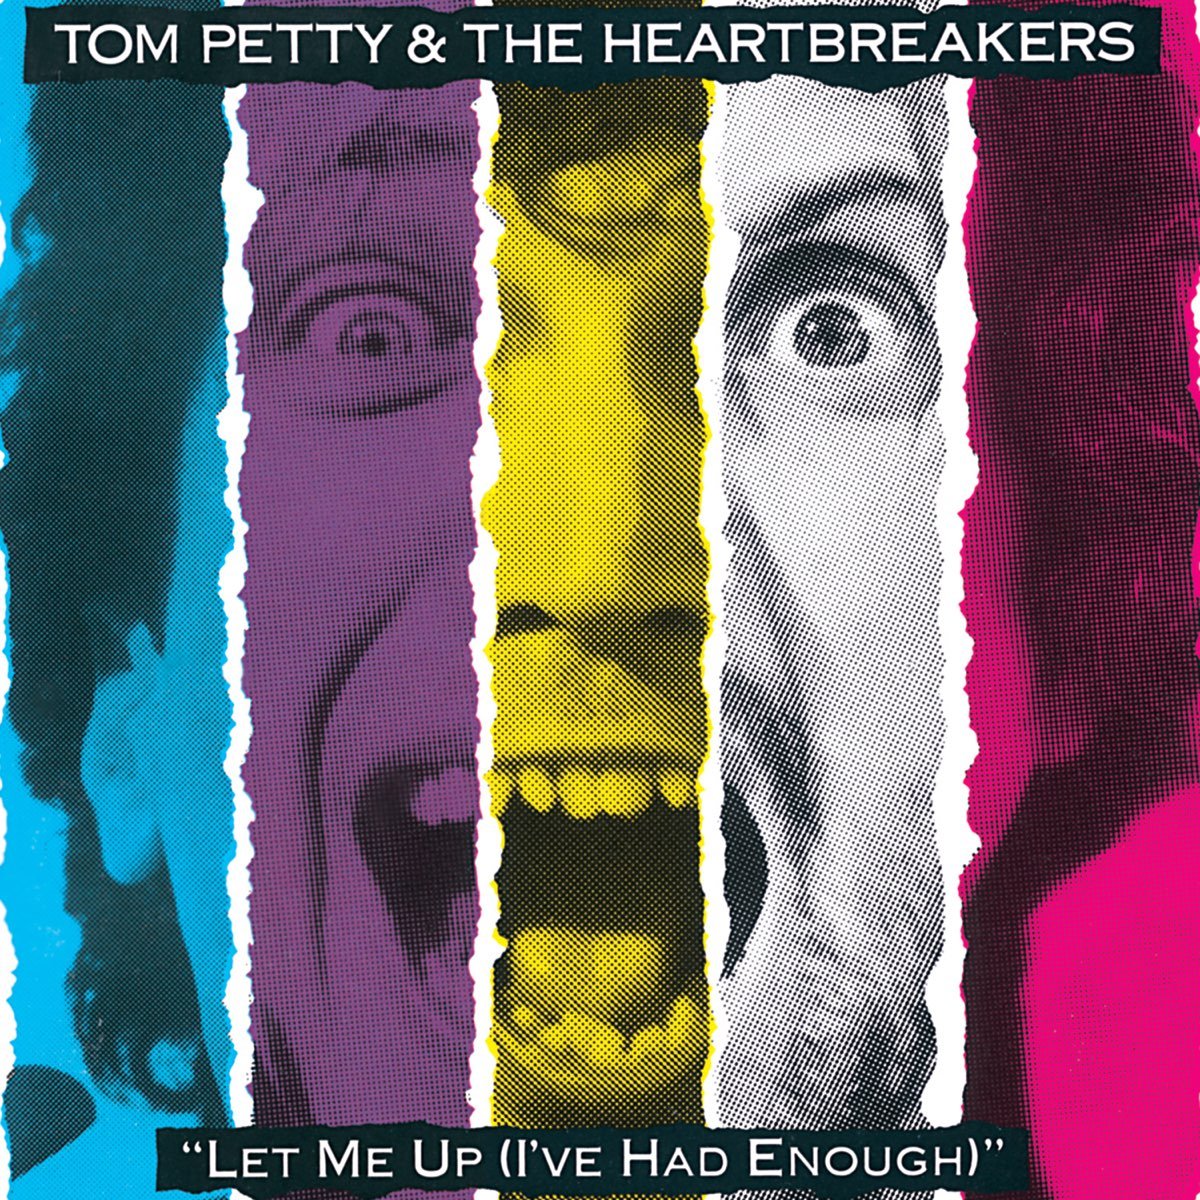 Tom Petty & The Heartbreakers - Let Me Up Vinyl